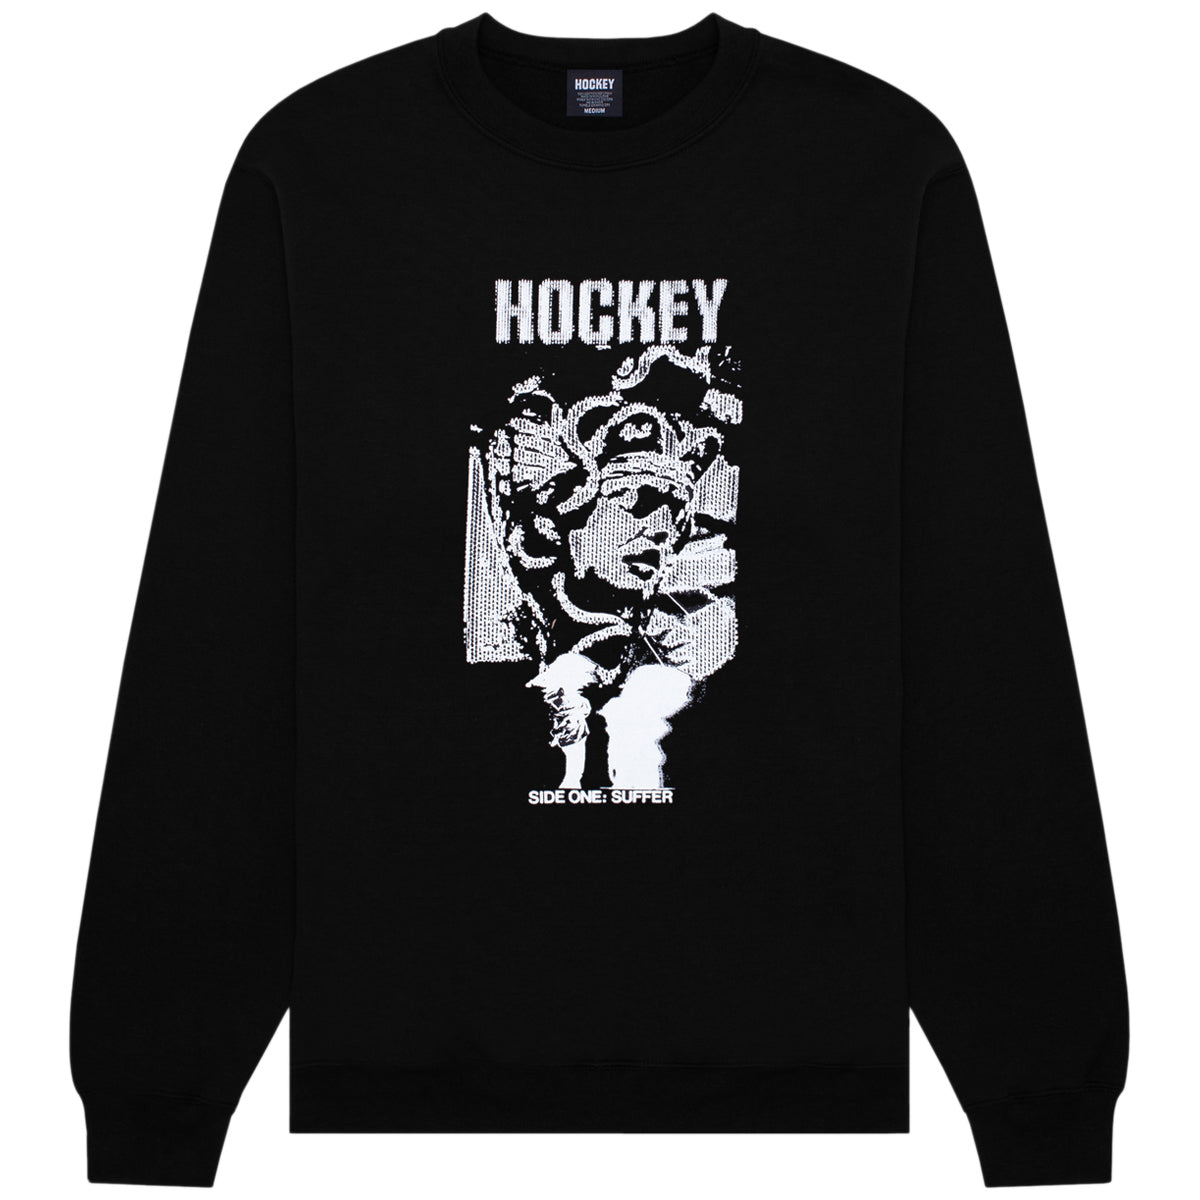 Hockey God of Suffer 2 Crewneck Sweatshirt - Black image 1